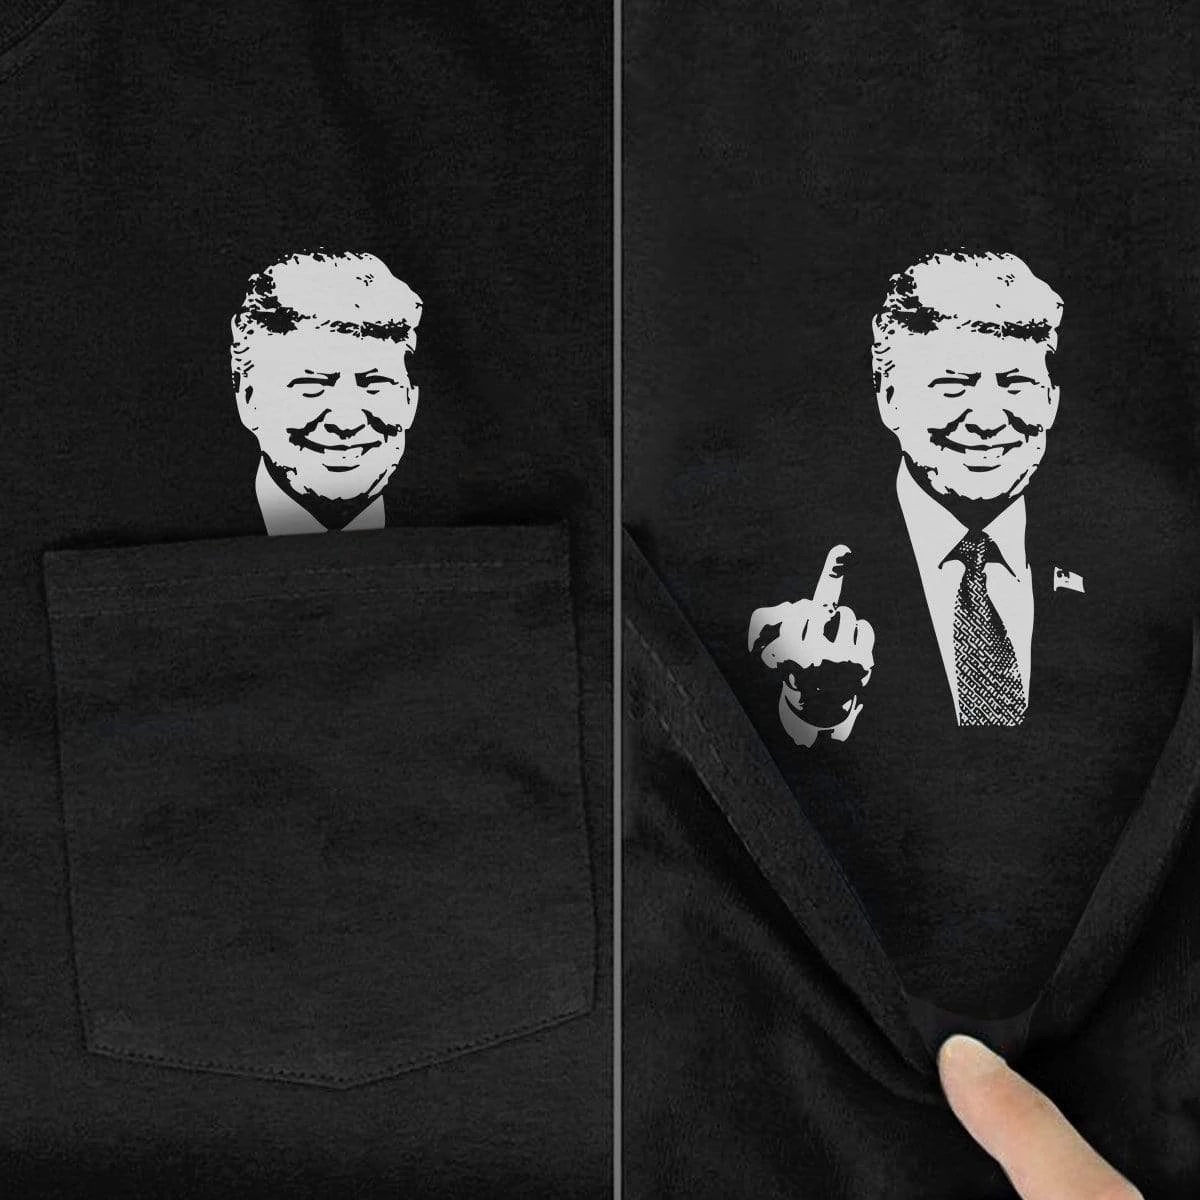 trump-making-liberals-cry-again-2020-pocket-shirt-aop-pocket-t-shirt-13187895197747